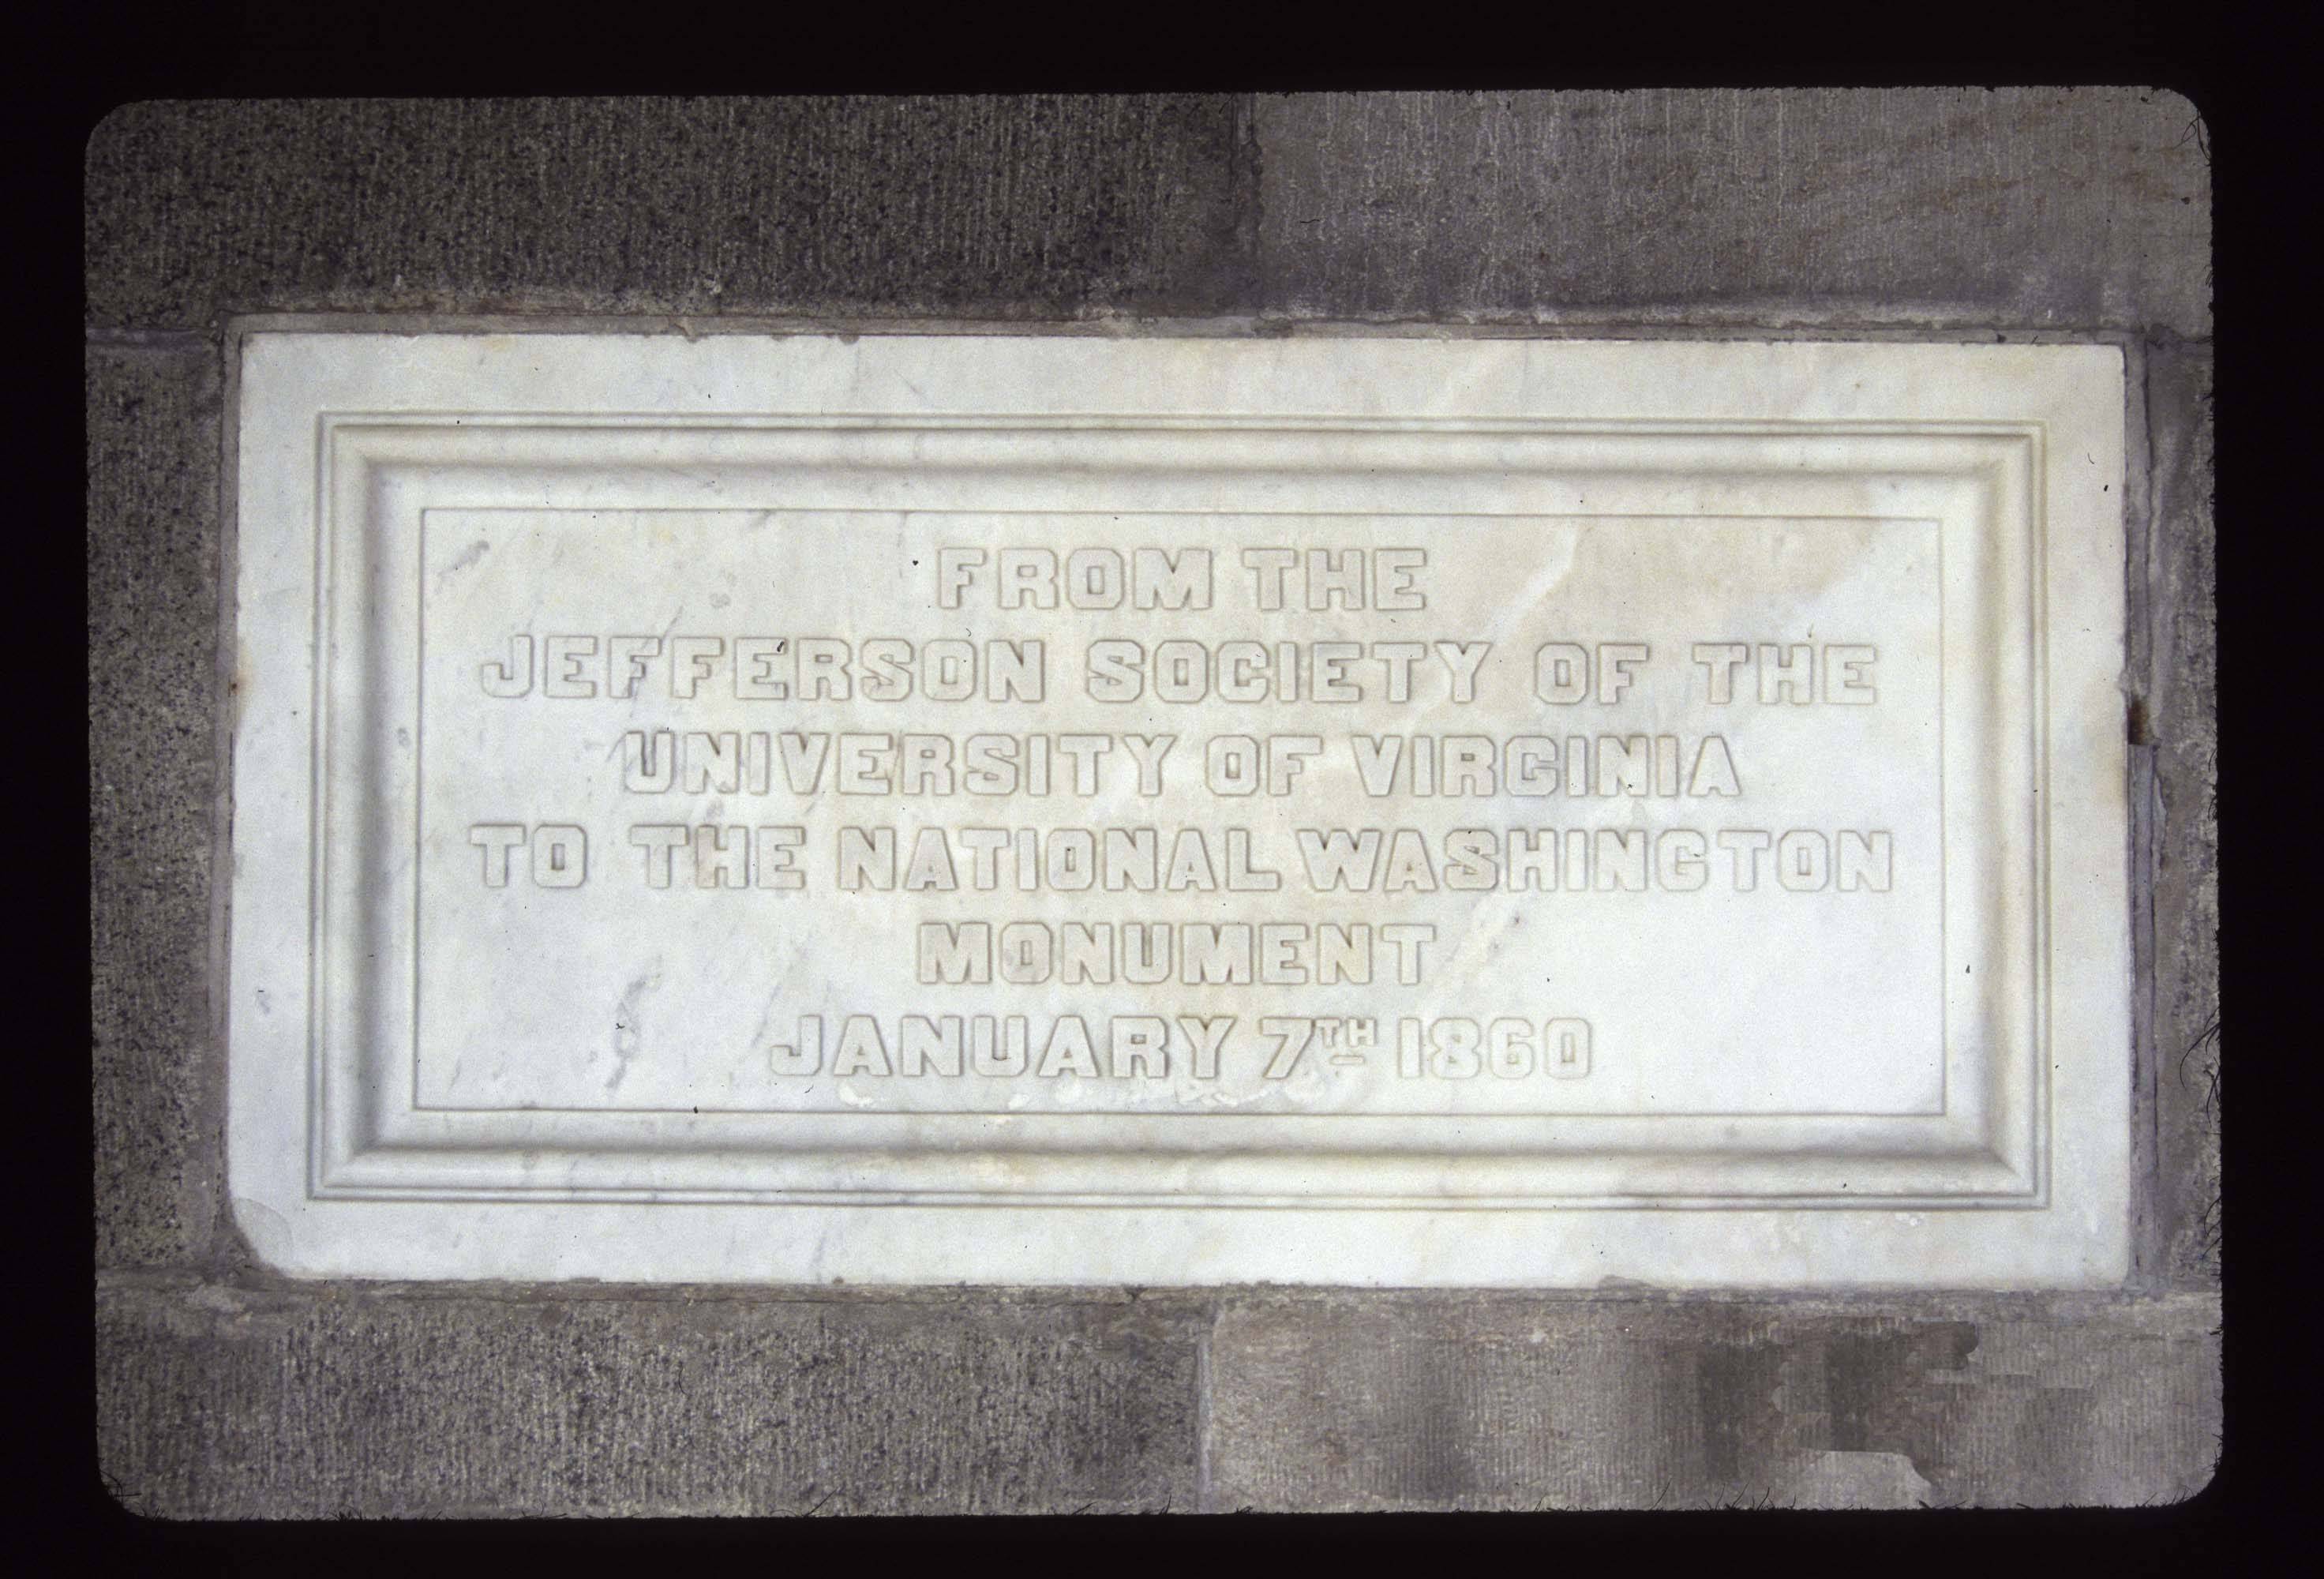 Jefferson Society of the Univ of Virginia